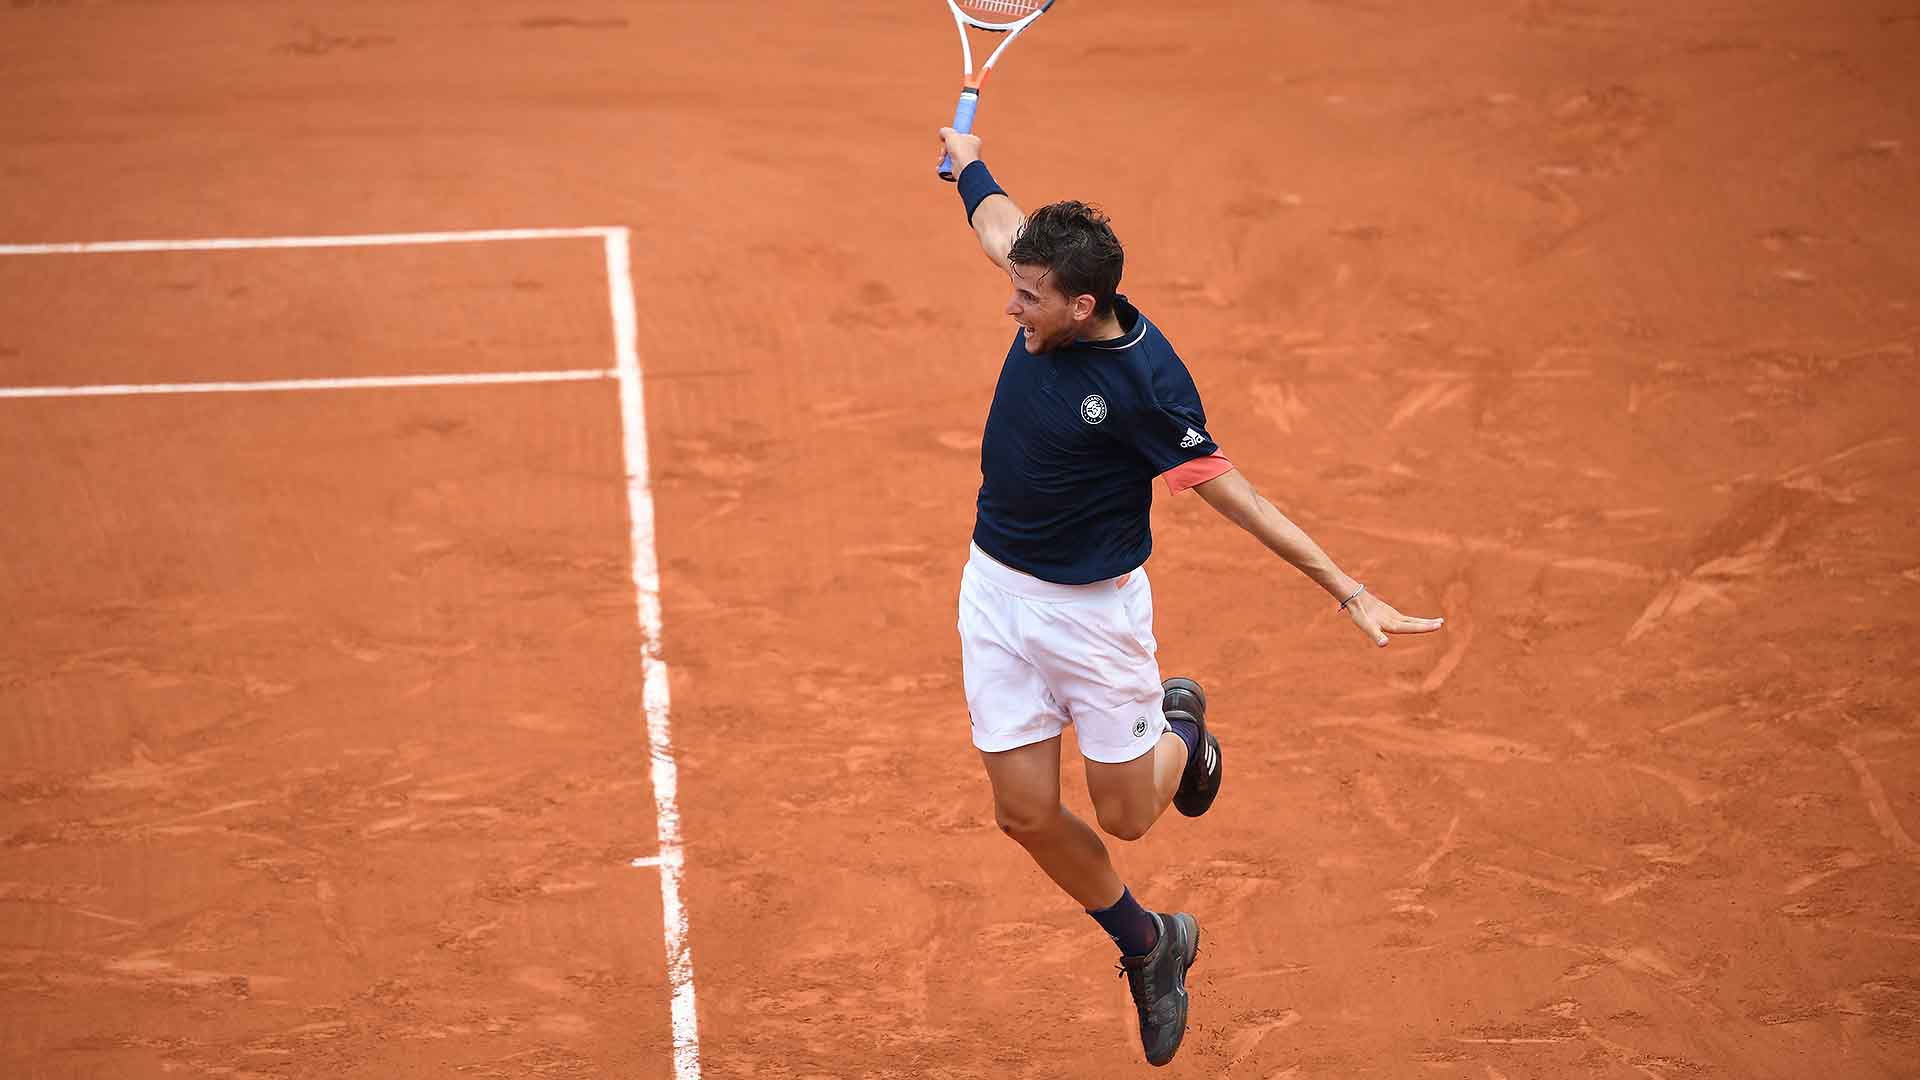 thiem roland garros 2018 final backhand - Vsemogočni Rafael Nadal do nove trofeje v Parizu!